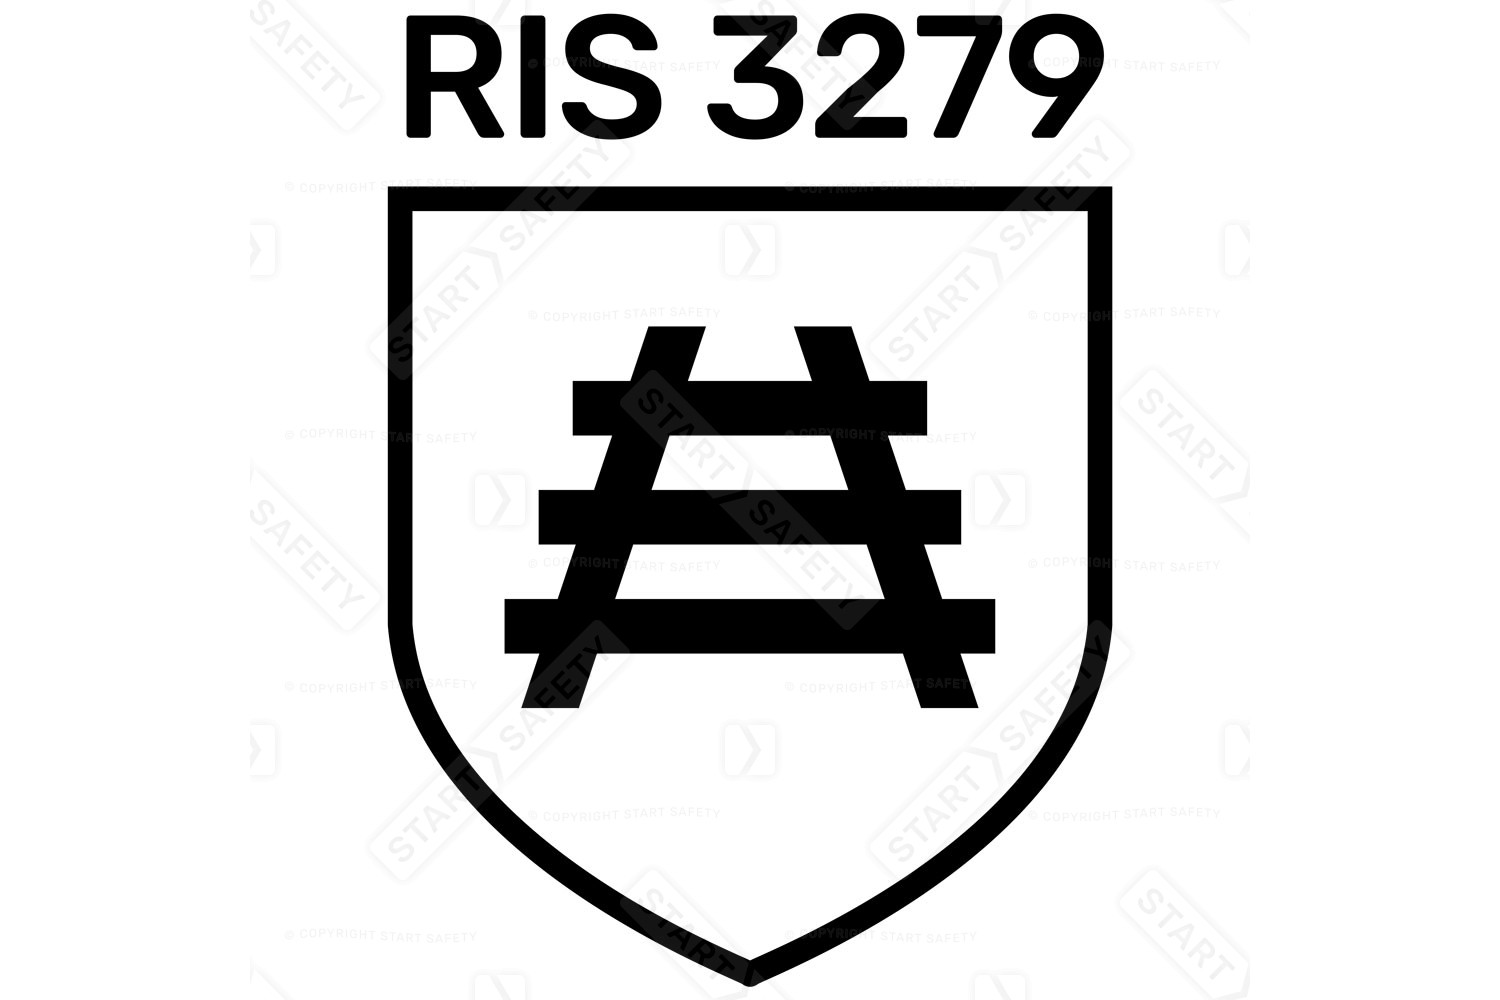 RIS3279 Rail Compliance